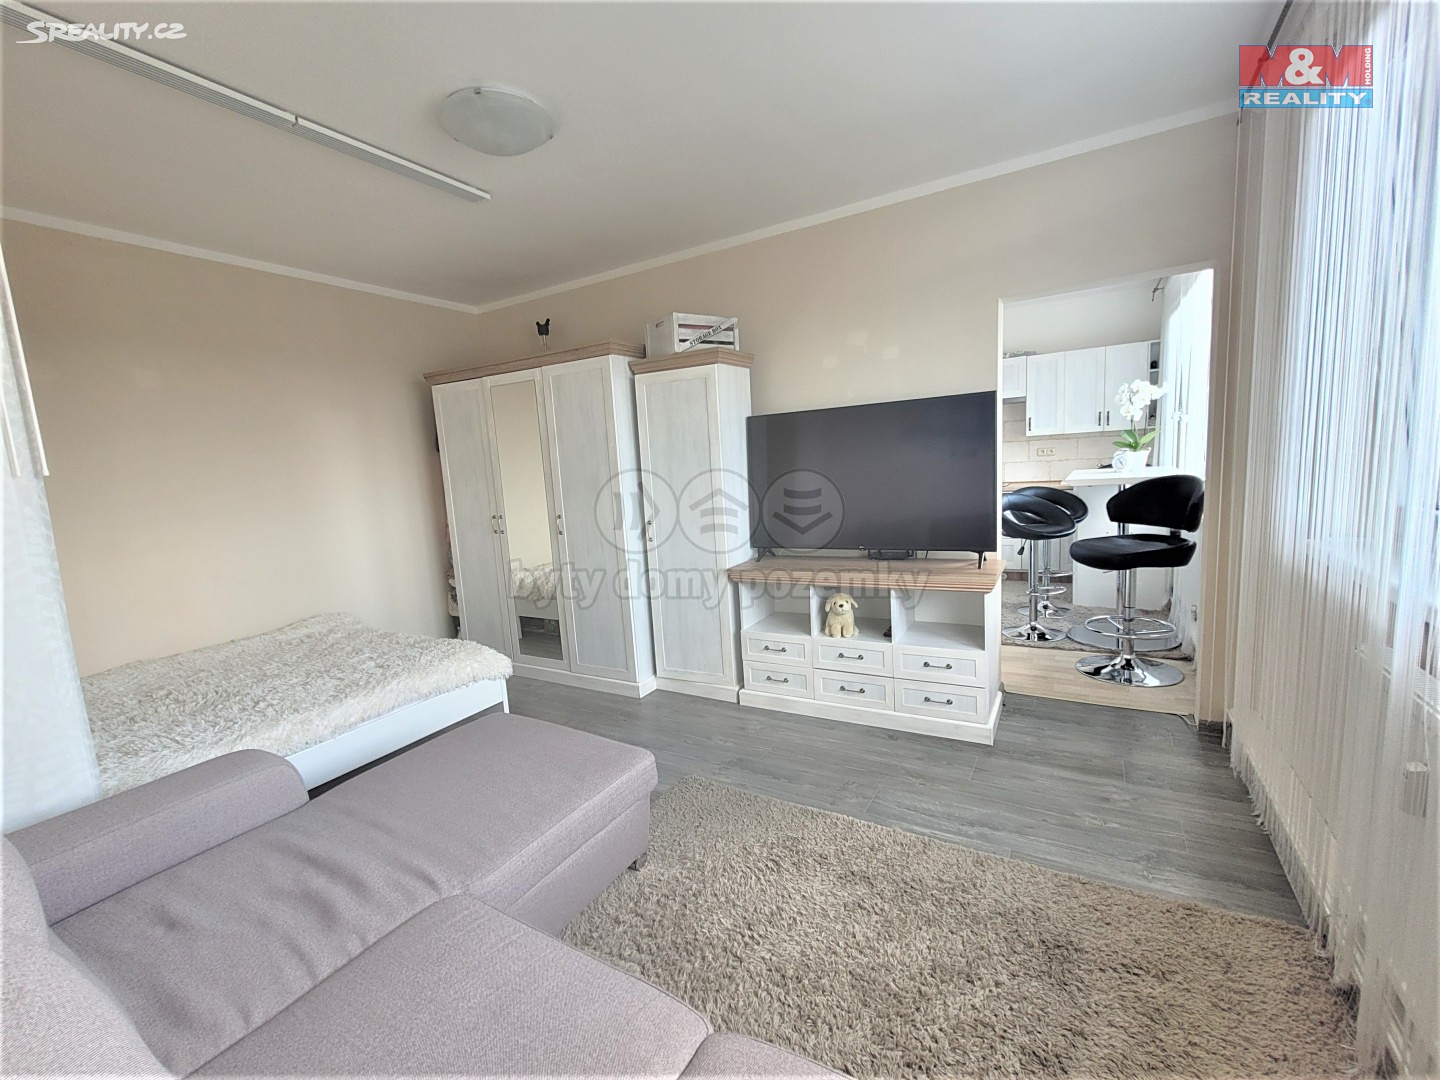 Prodej bytu 1+1 30 m², Dubová, Karlovy Vary - Bohatice